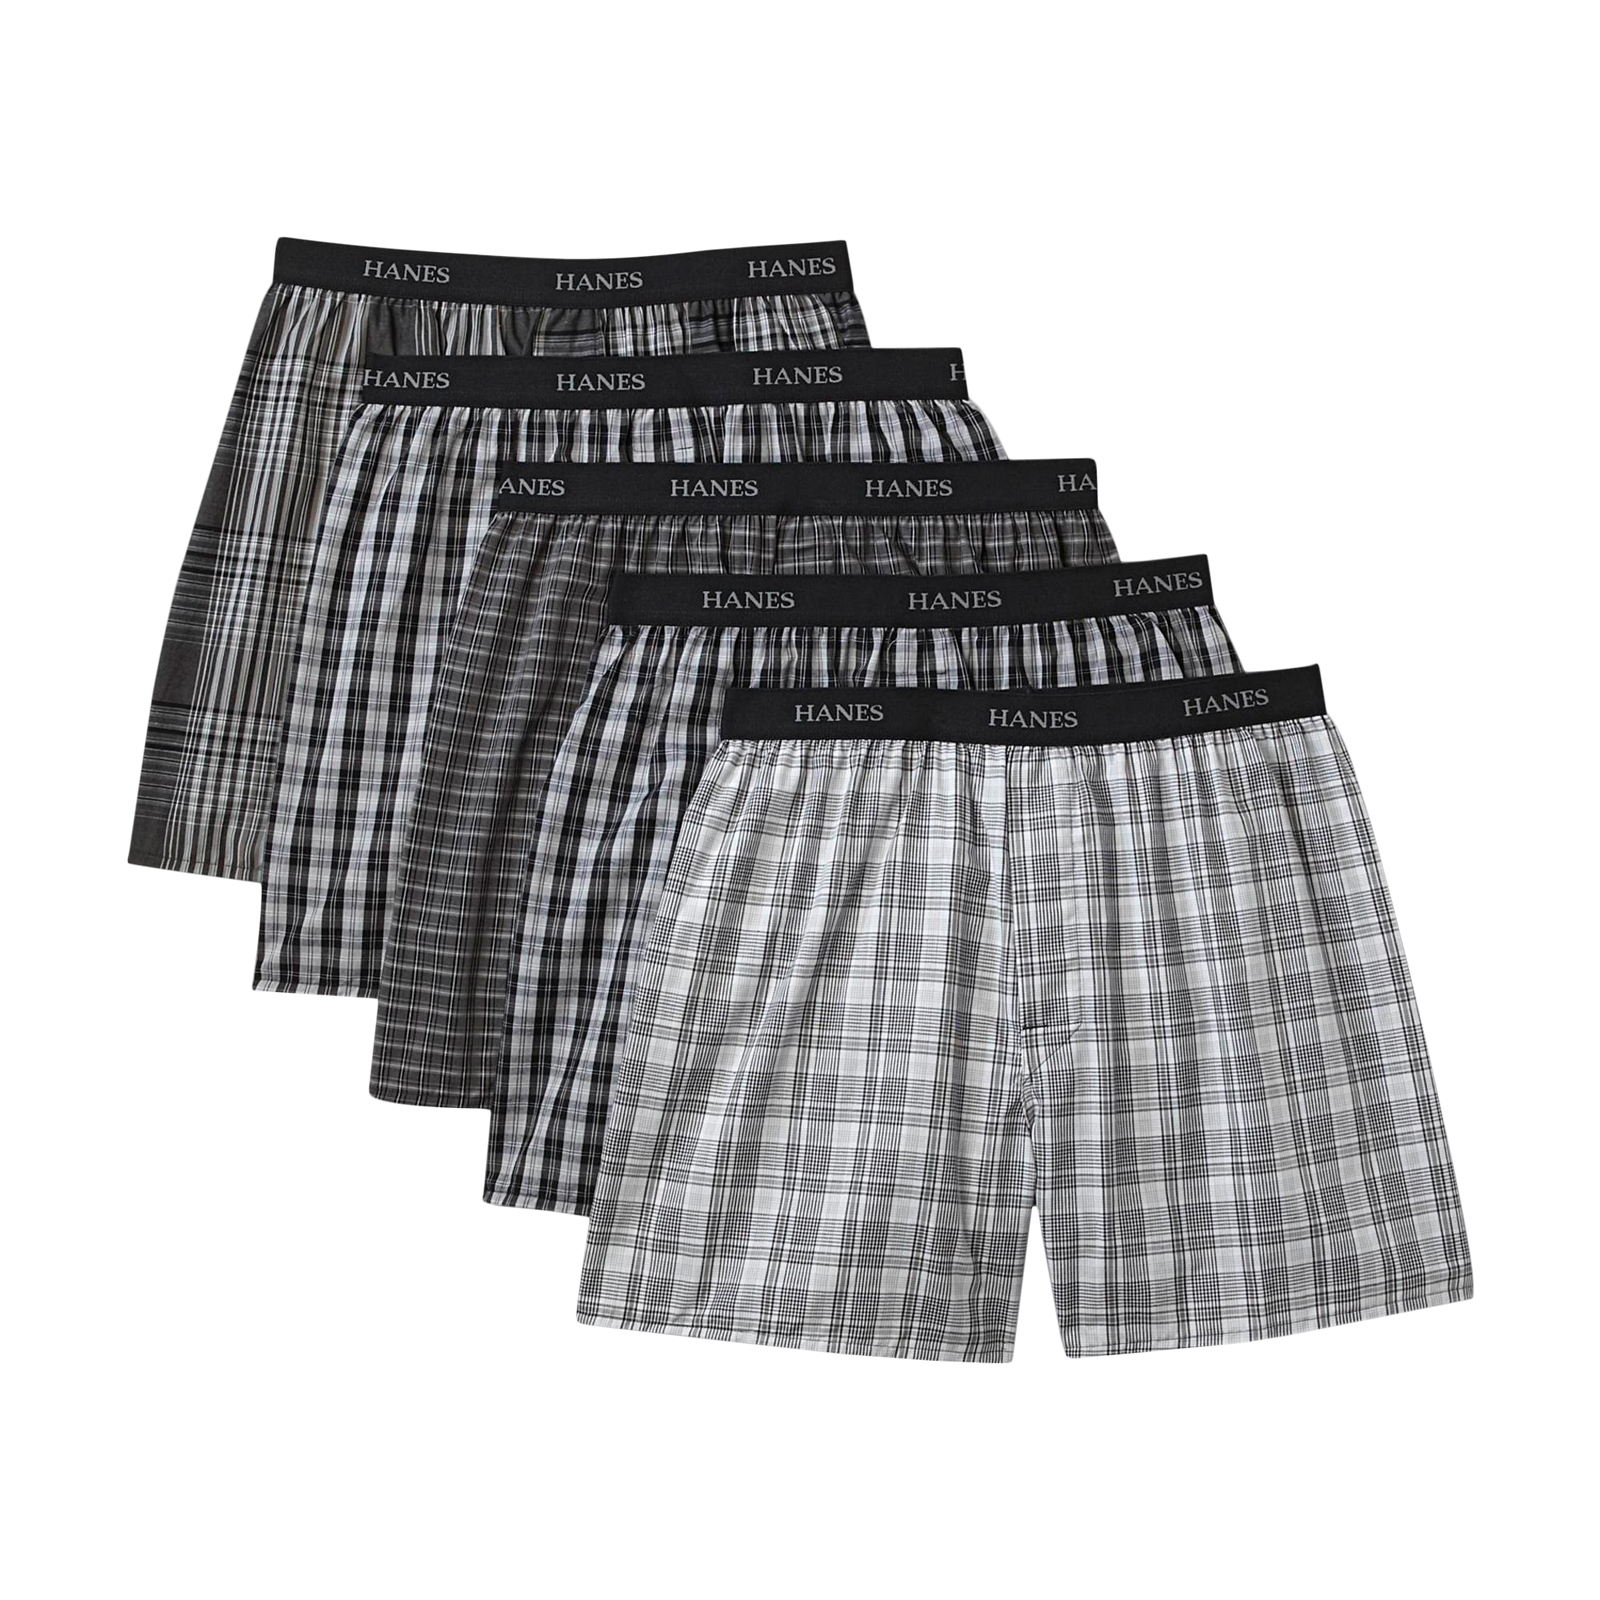 Hanes Men's Tagless Boxer Shorts - 5 Pack